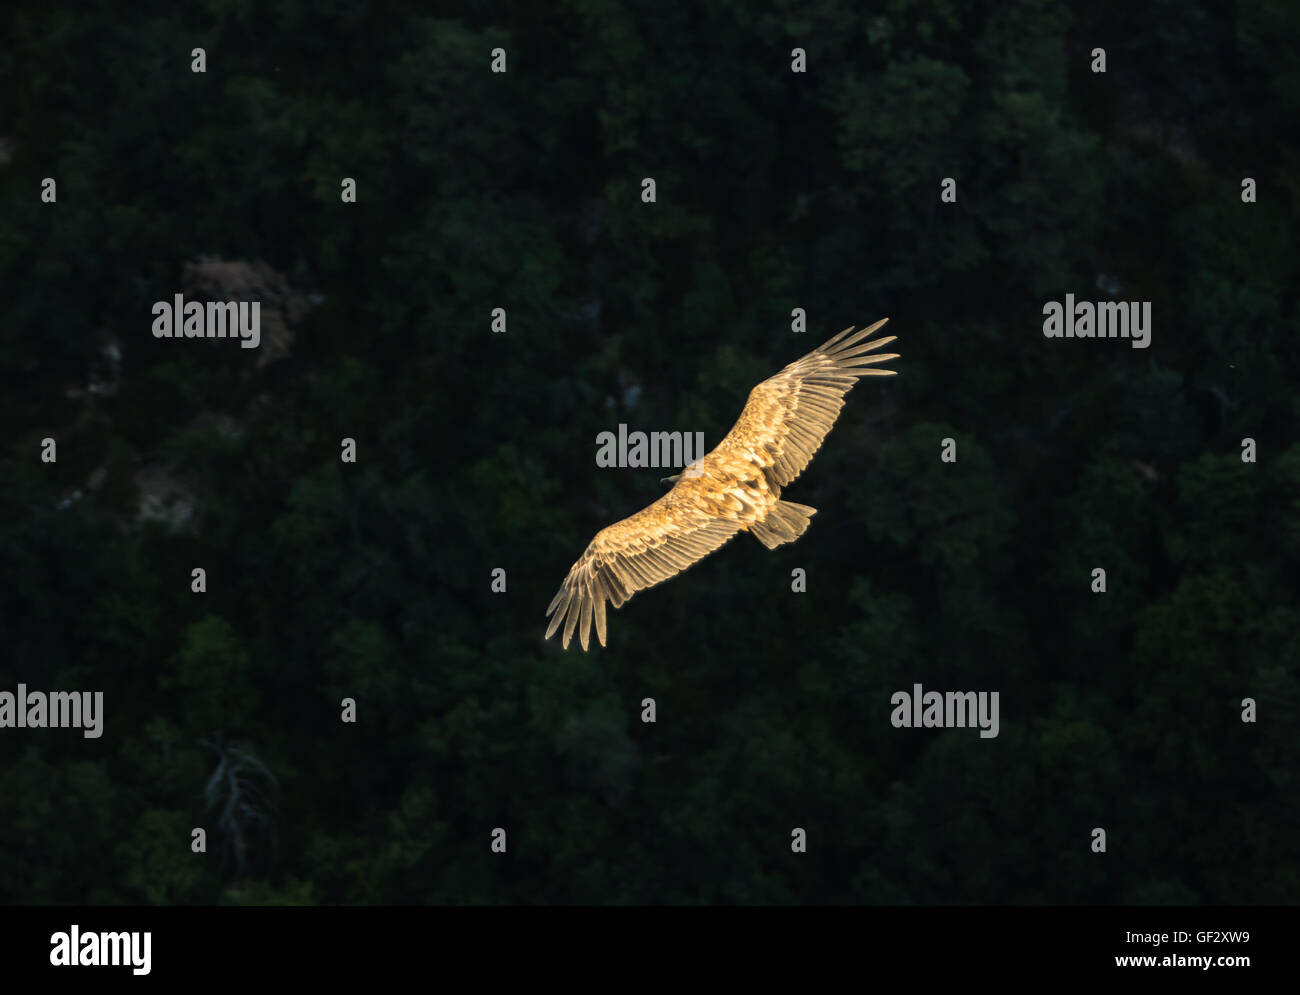 Pájaro grifo fotografías e imágenes de alta resolución - Alamy